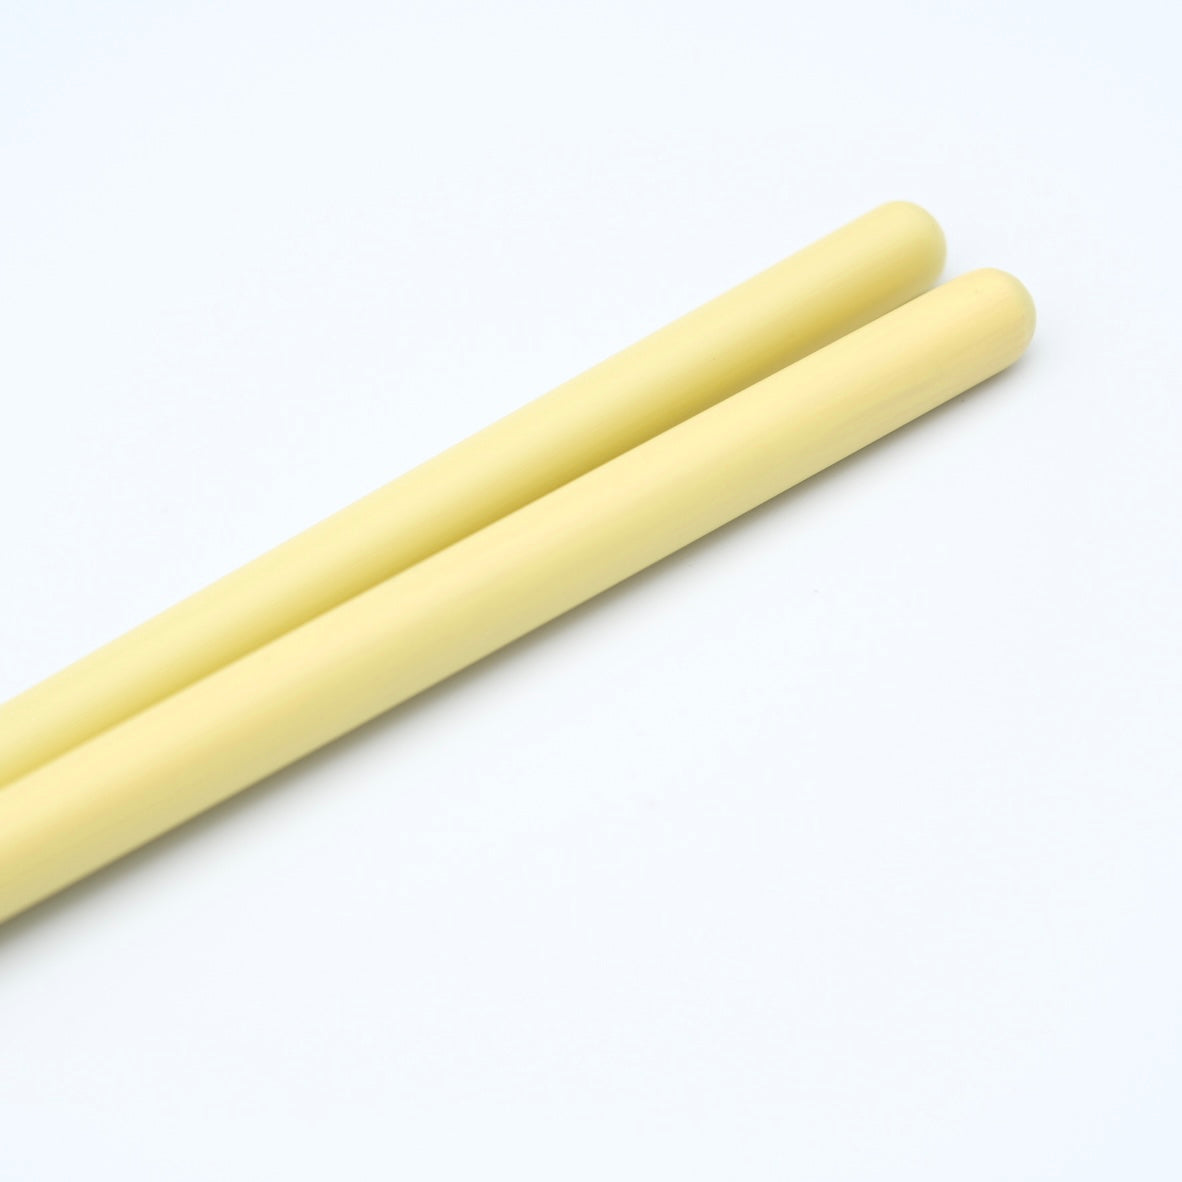 Two pairs of chopsticks 26cm